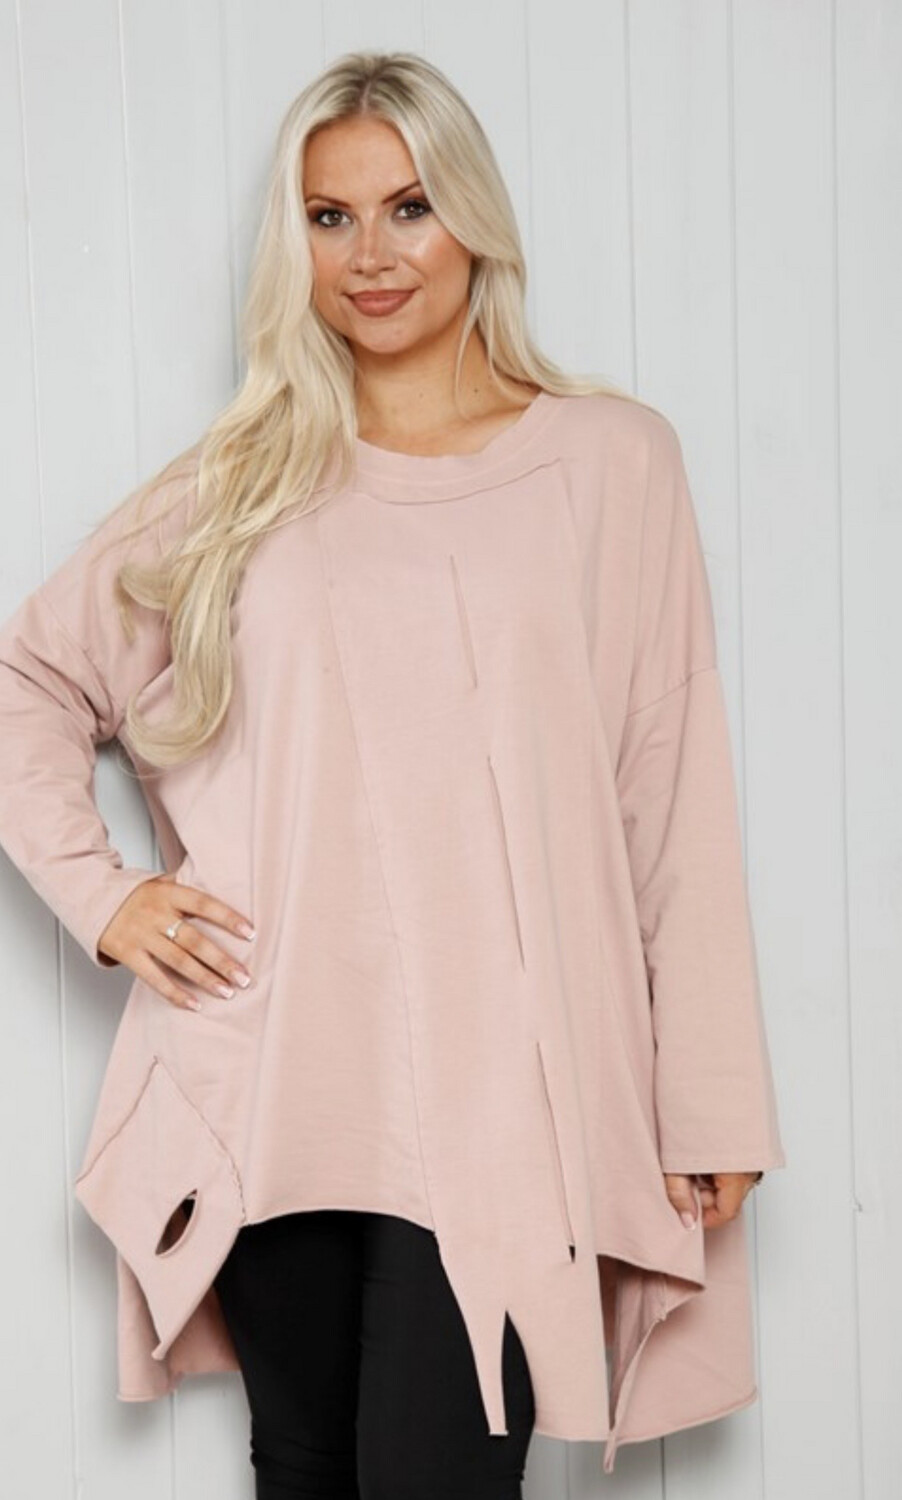 Super Soft Jersey Fabric( Pink)